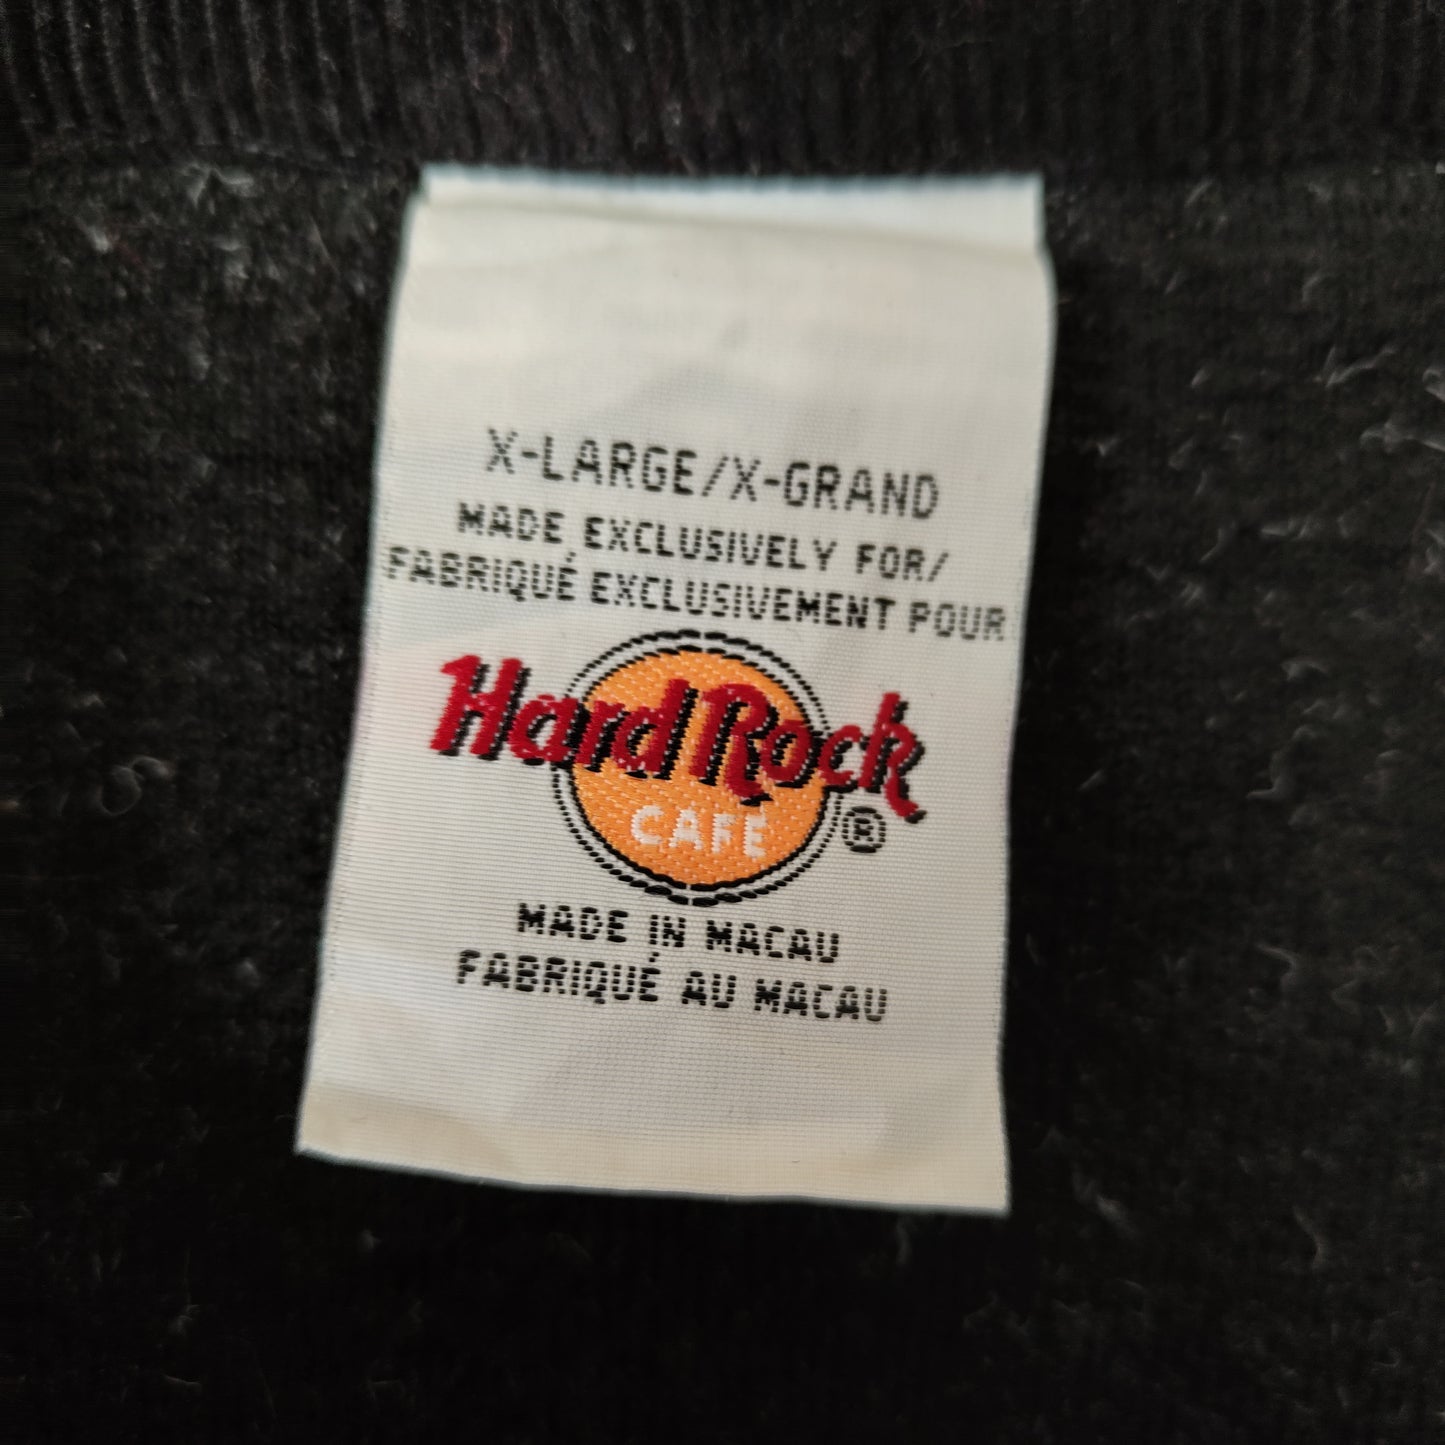 [HardRockCafe] half snap fleece jacket